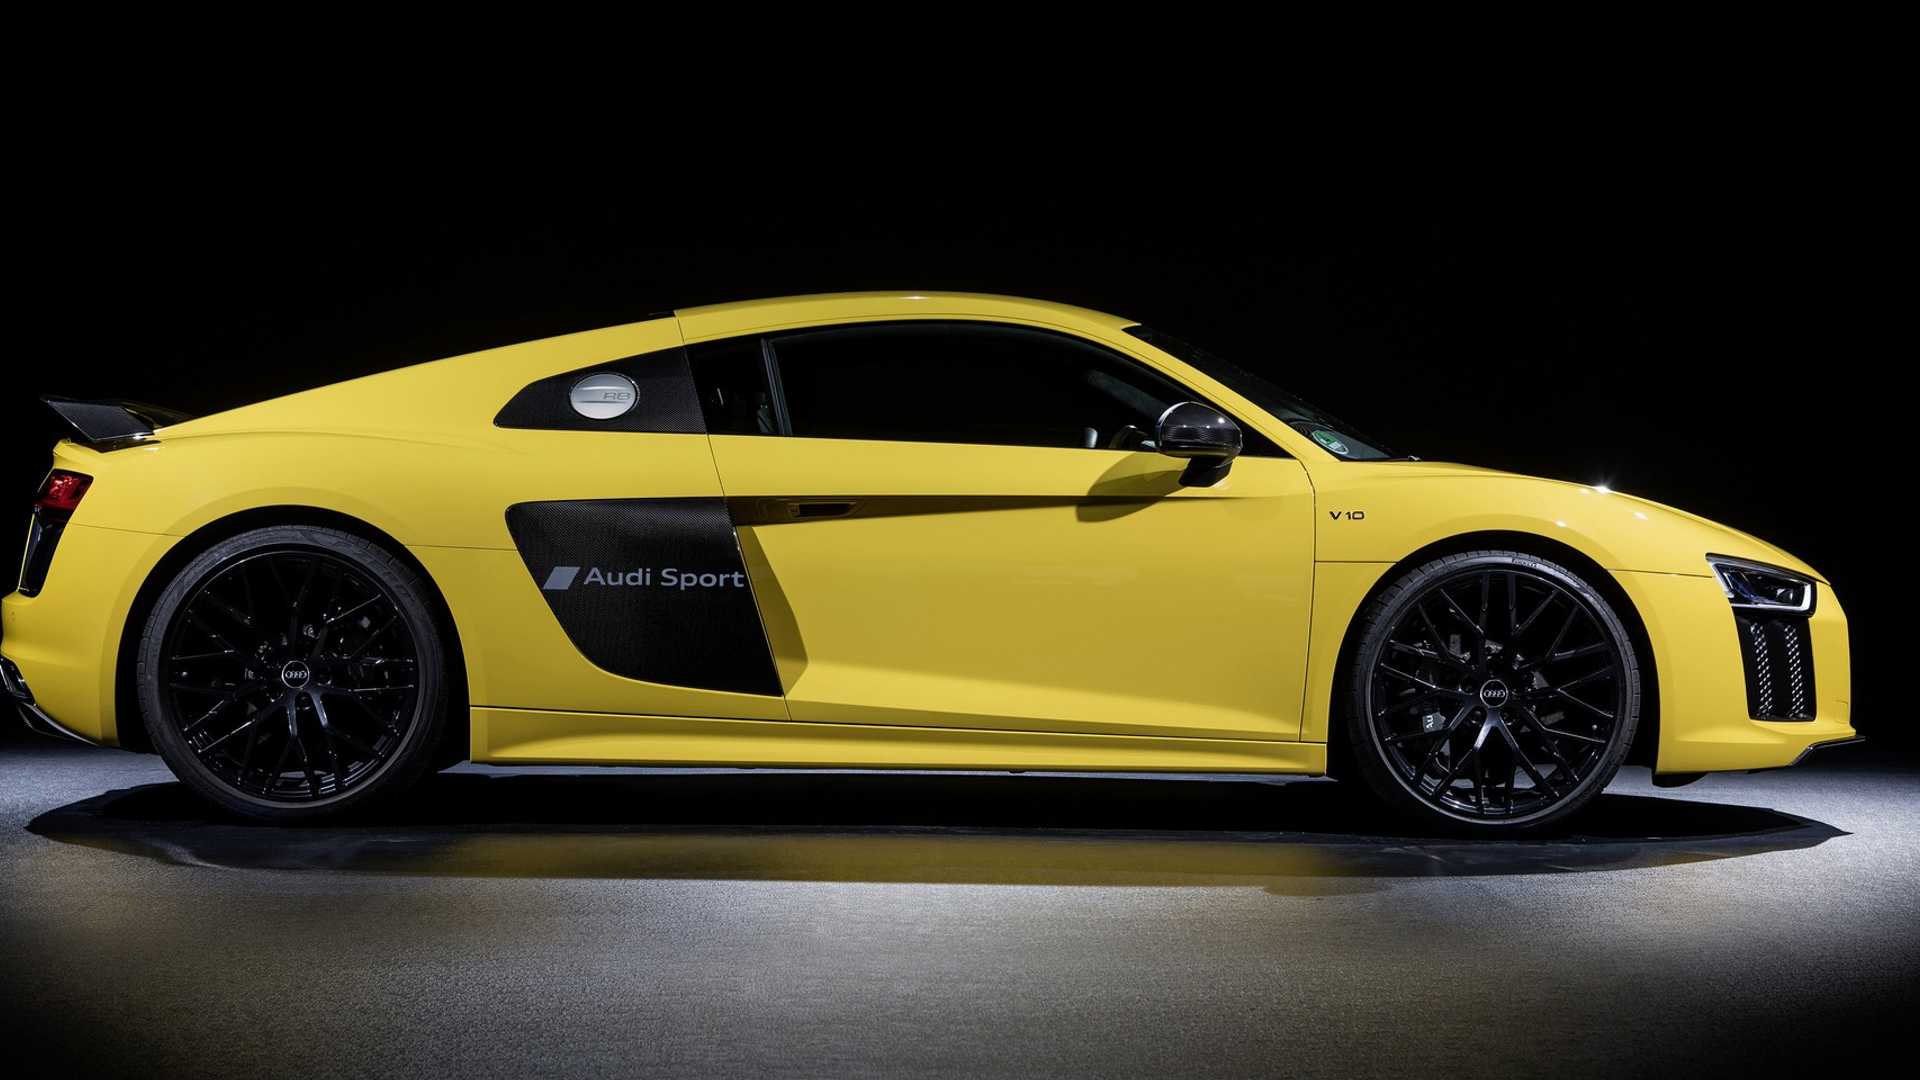 Audi Introduces Partial Matting Paint Process to Automotive World